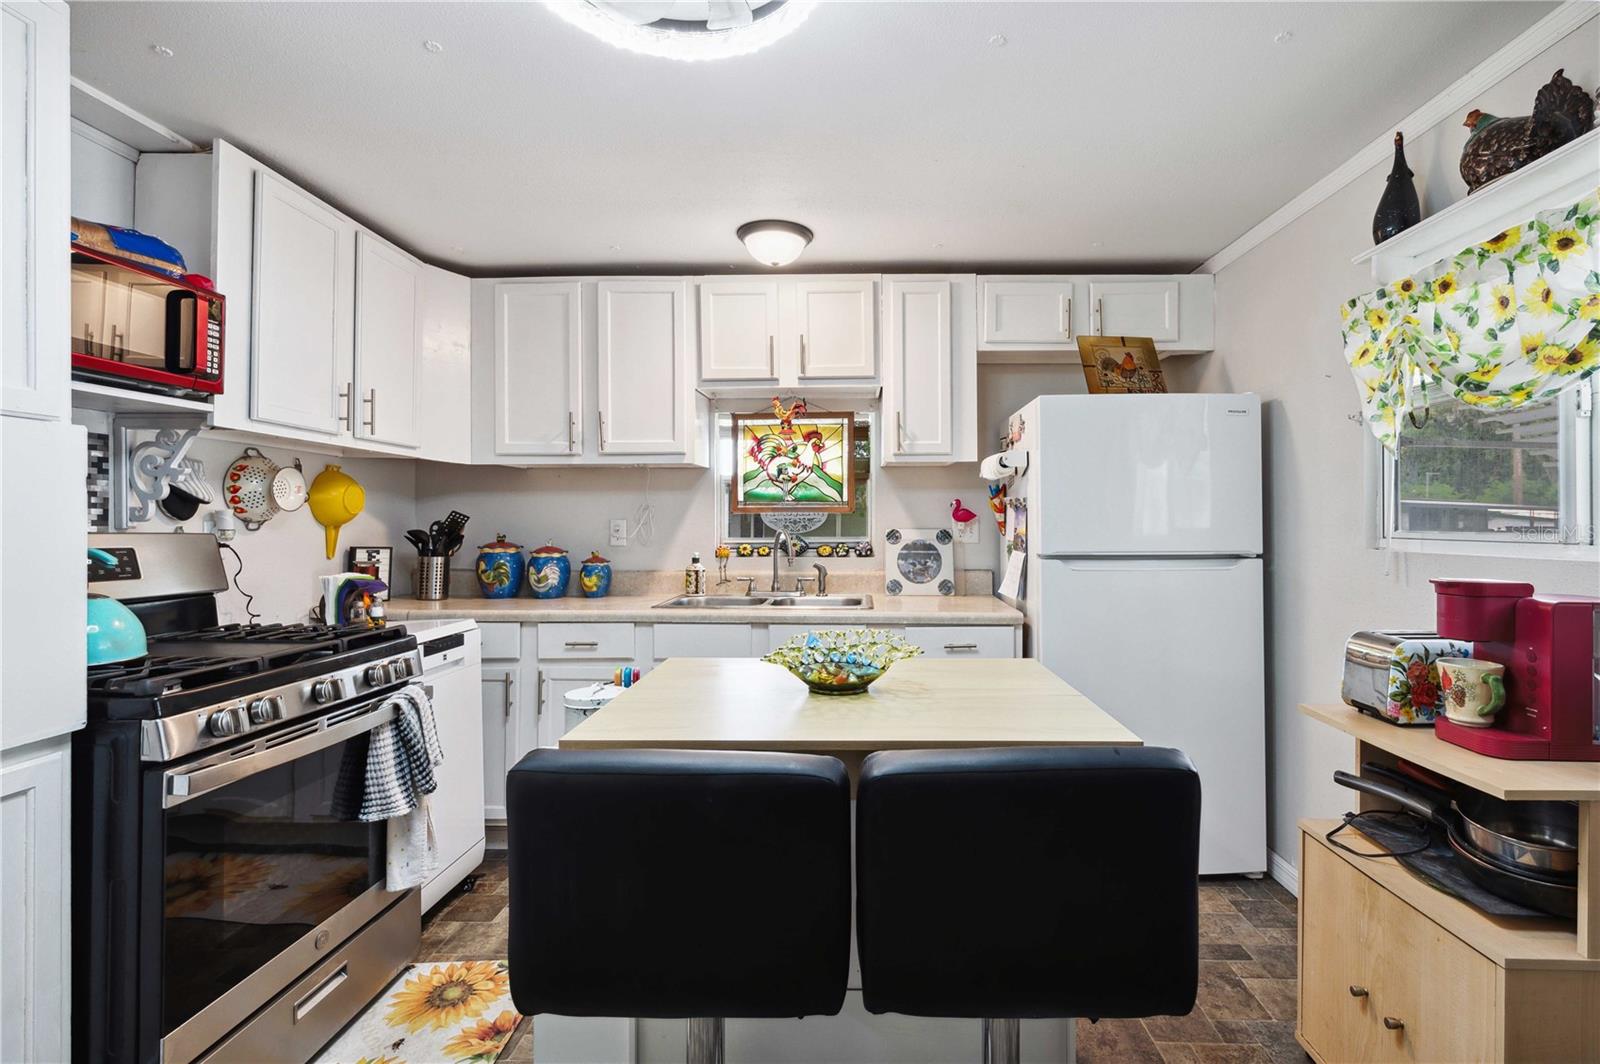 Kitchen has vinyl flooring, center island, updated appliances, and ample storage.